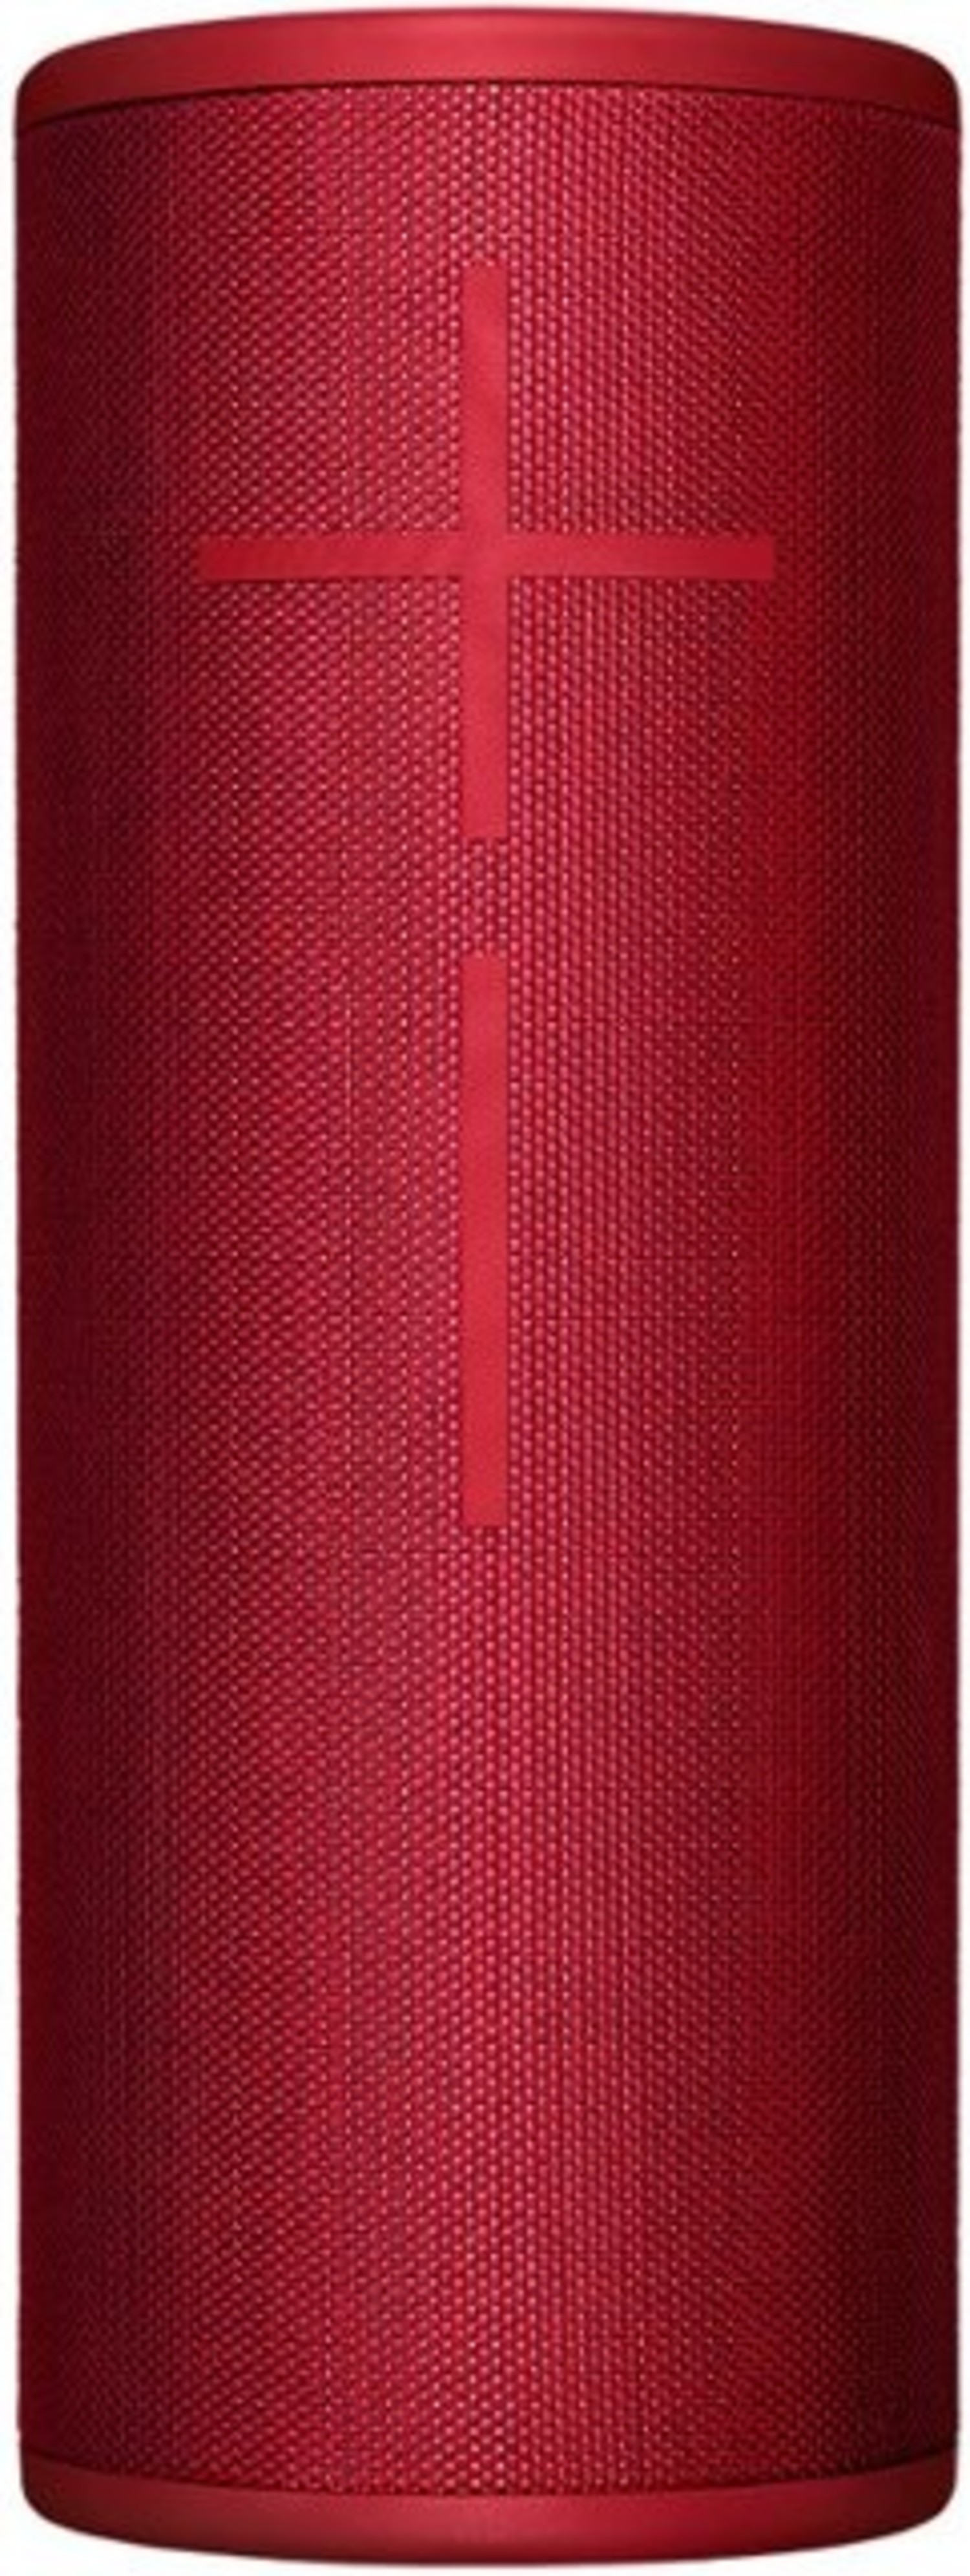 Ultimate Ears MEGABOOM 3 Portable Bluetooth Speaker System - Red -  kite+key, Rutgers Tech Store